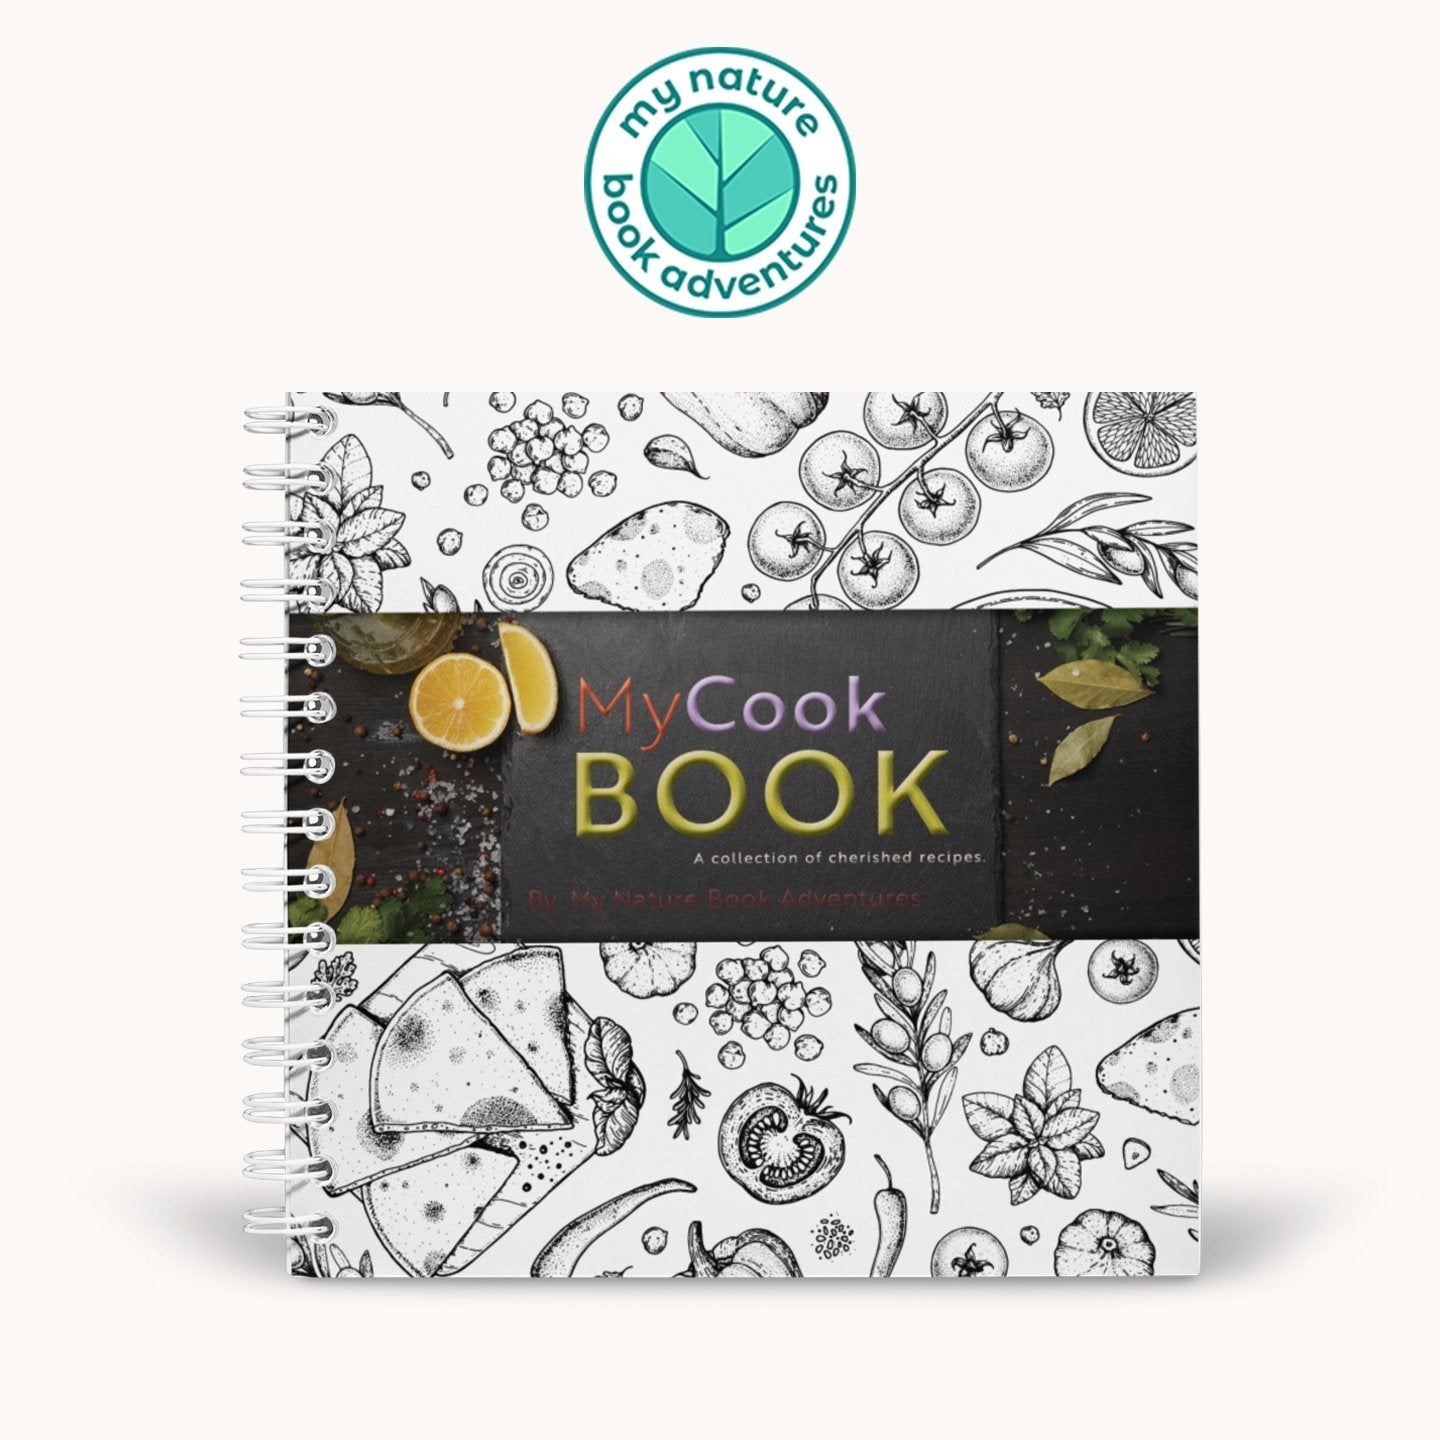 Build Your Own Custom - My Cookbook - Recipe Book – My Nature Book